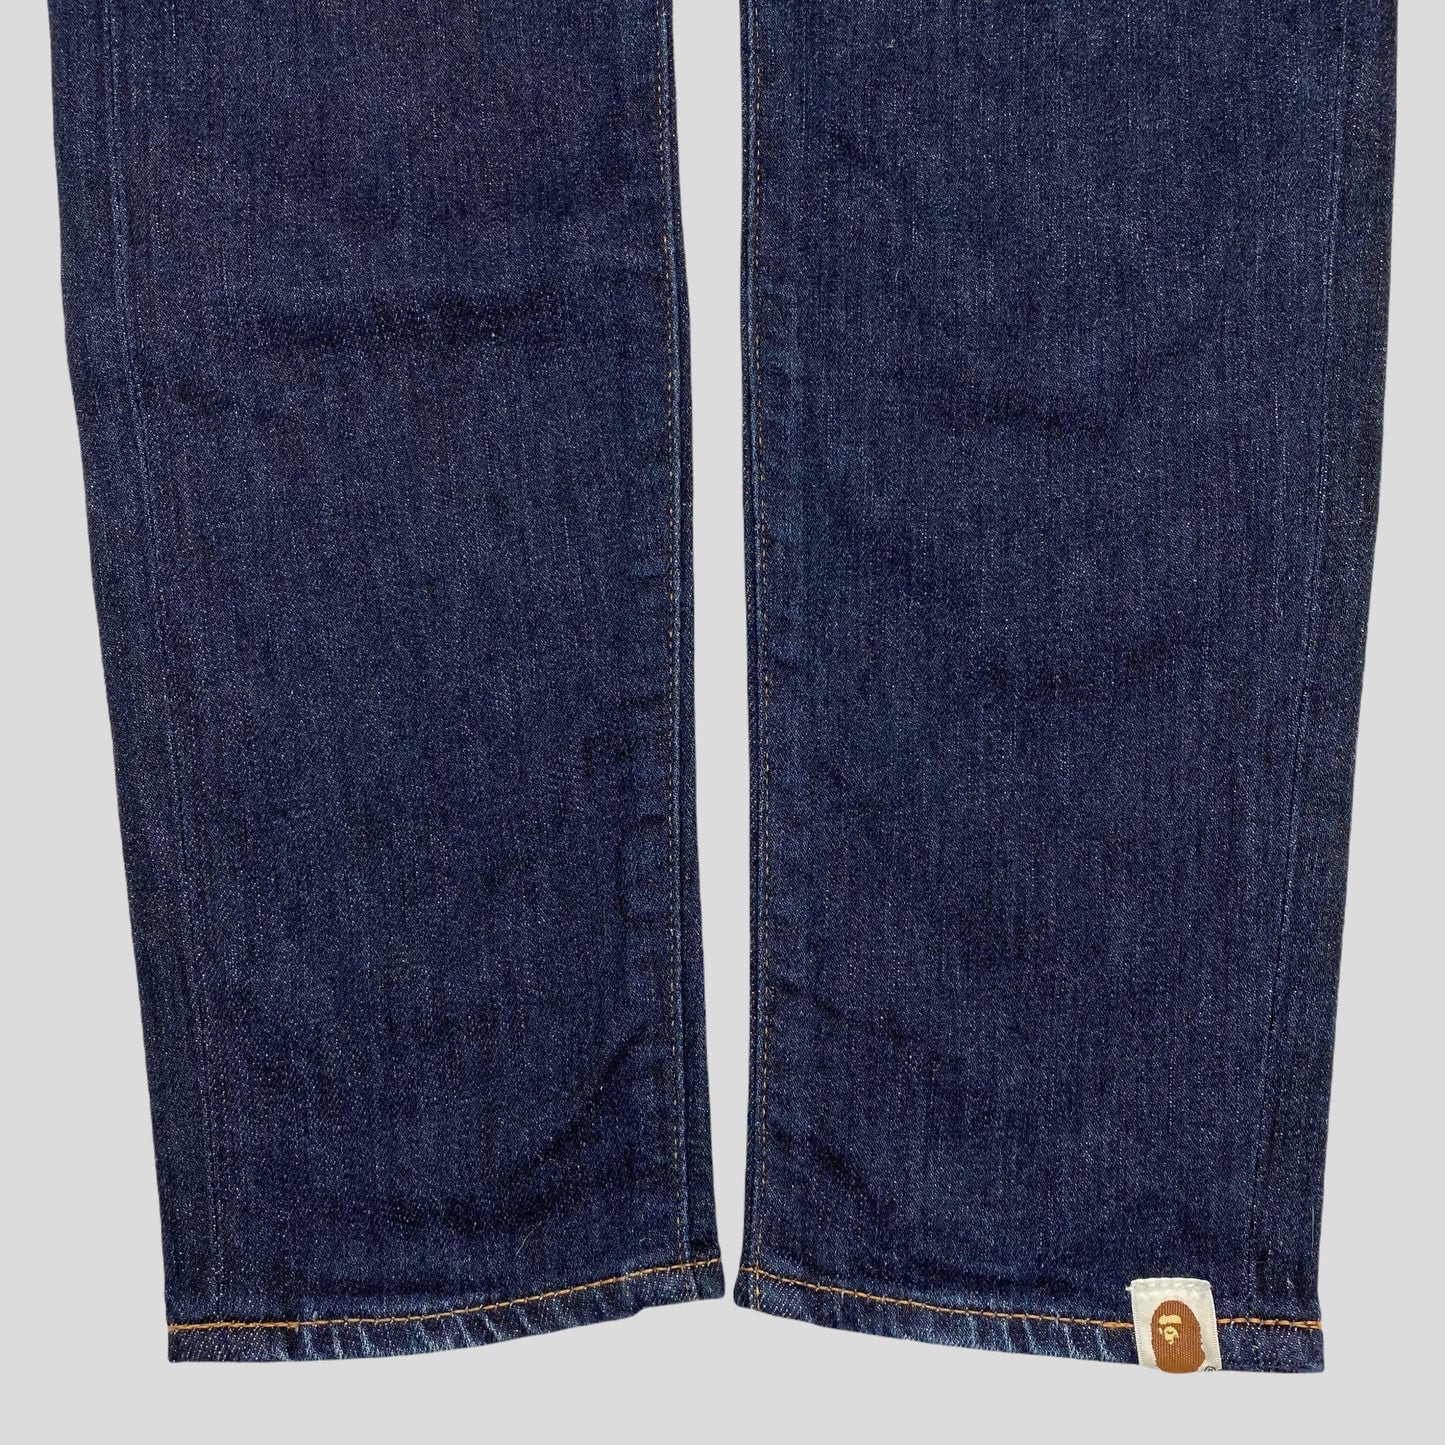 Bape Sta 1st Camo Jeans - W28 - Known Source